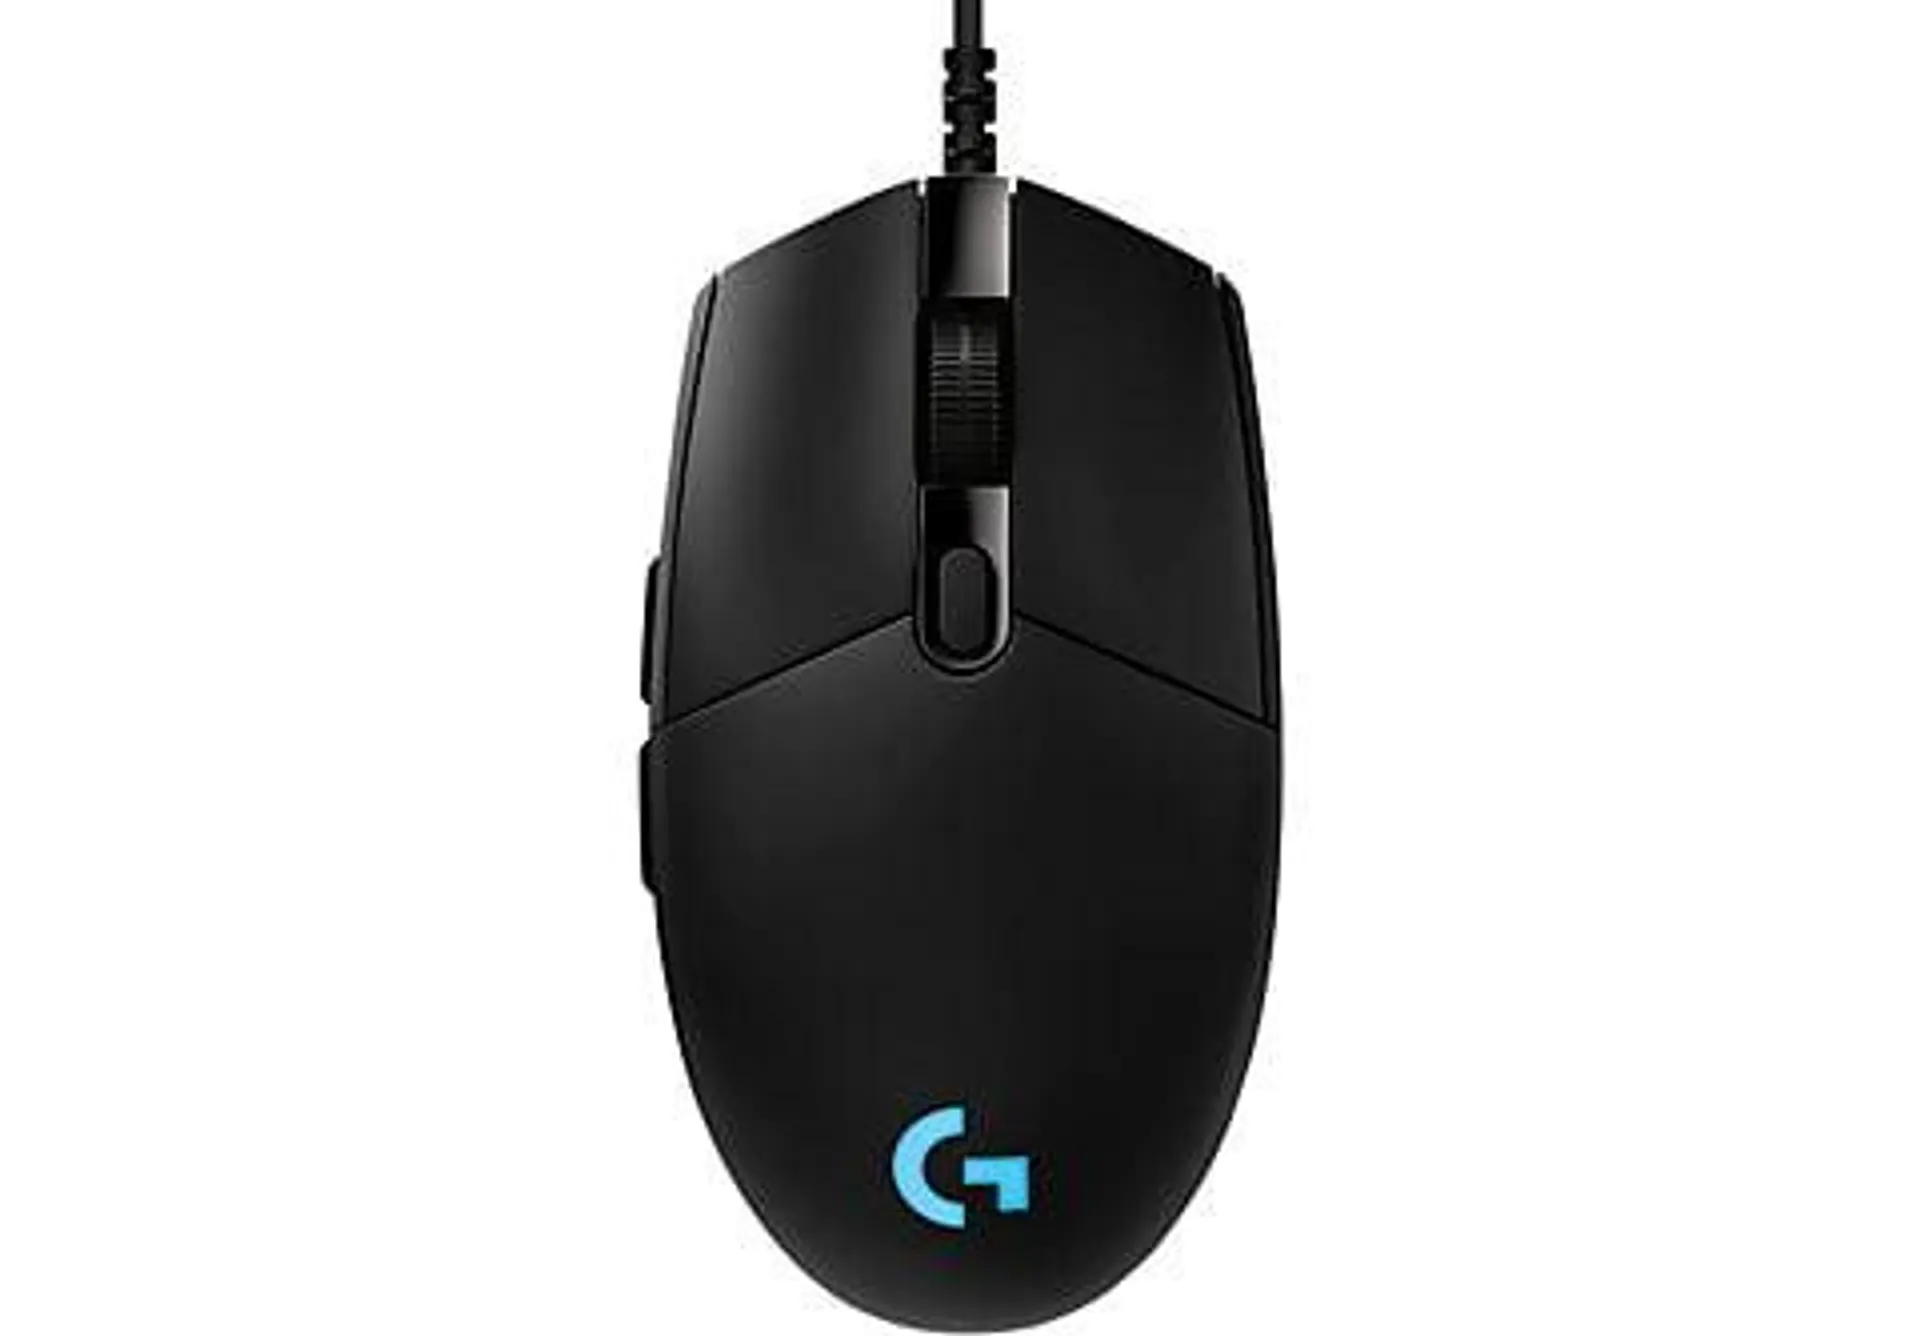 Ratón gaming - Logitech PRO Gaming Mouse, Sensor HERO 25K, 25600 DPI, RGB, Peso ultra reducido, 6 Botones programables, Memoria integrada, Negro